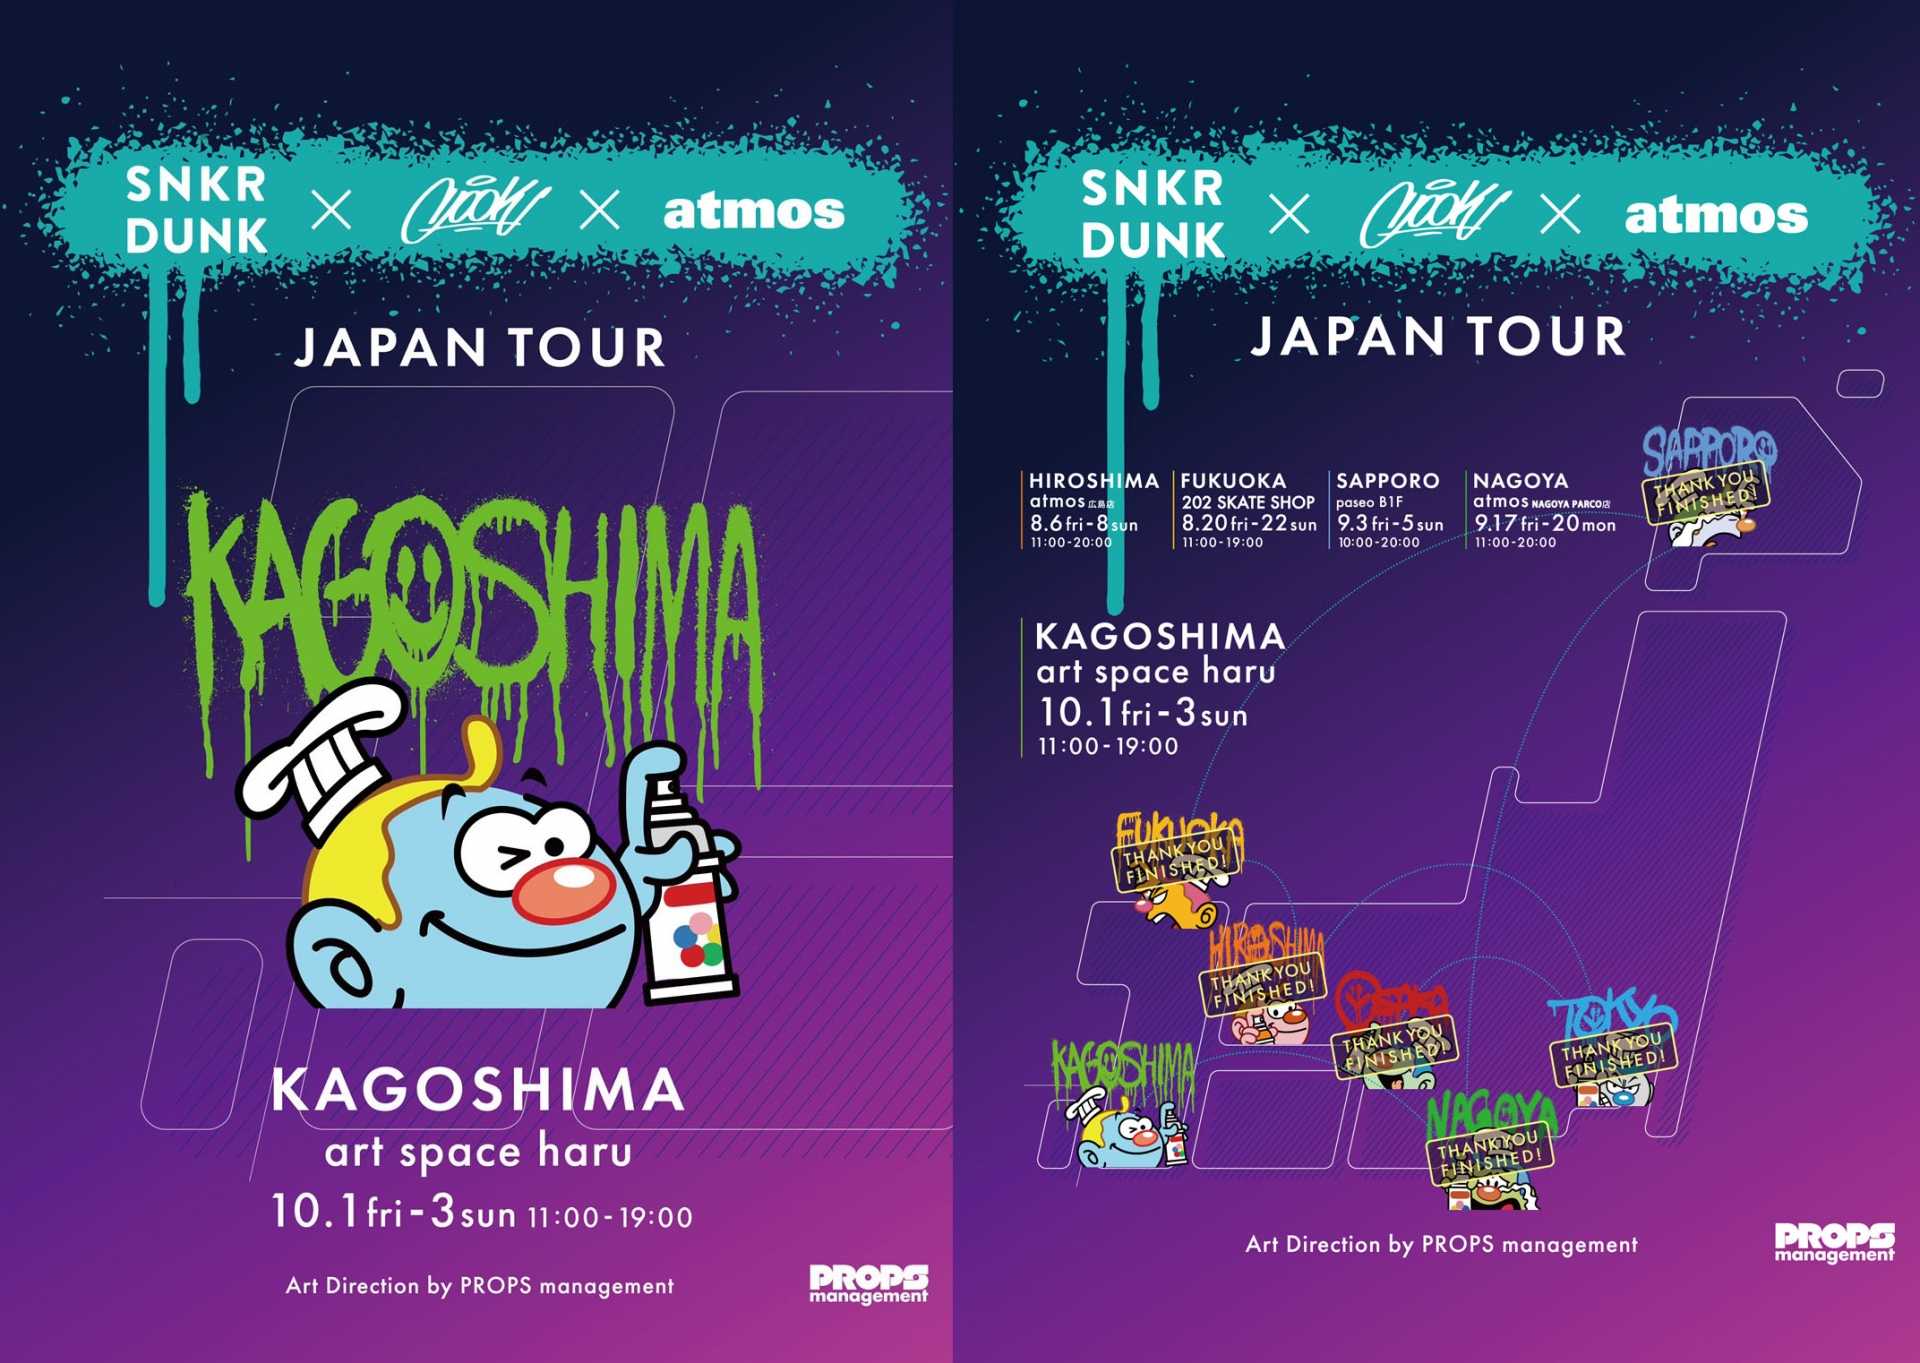 「SNKRDUNK x COOK x atmos JAPAN TOUR Art Direction by PROPS management」